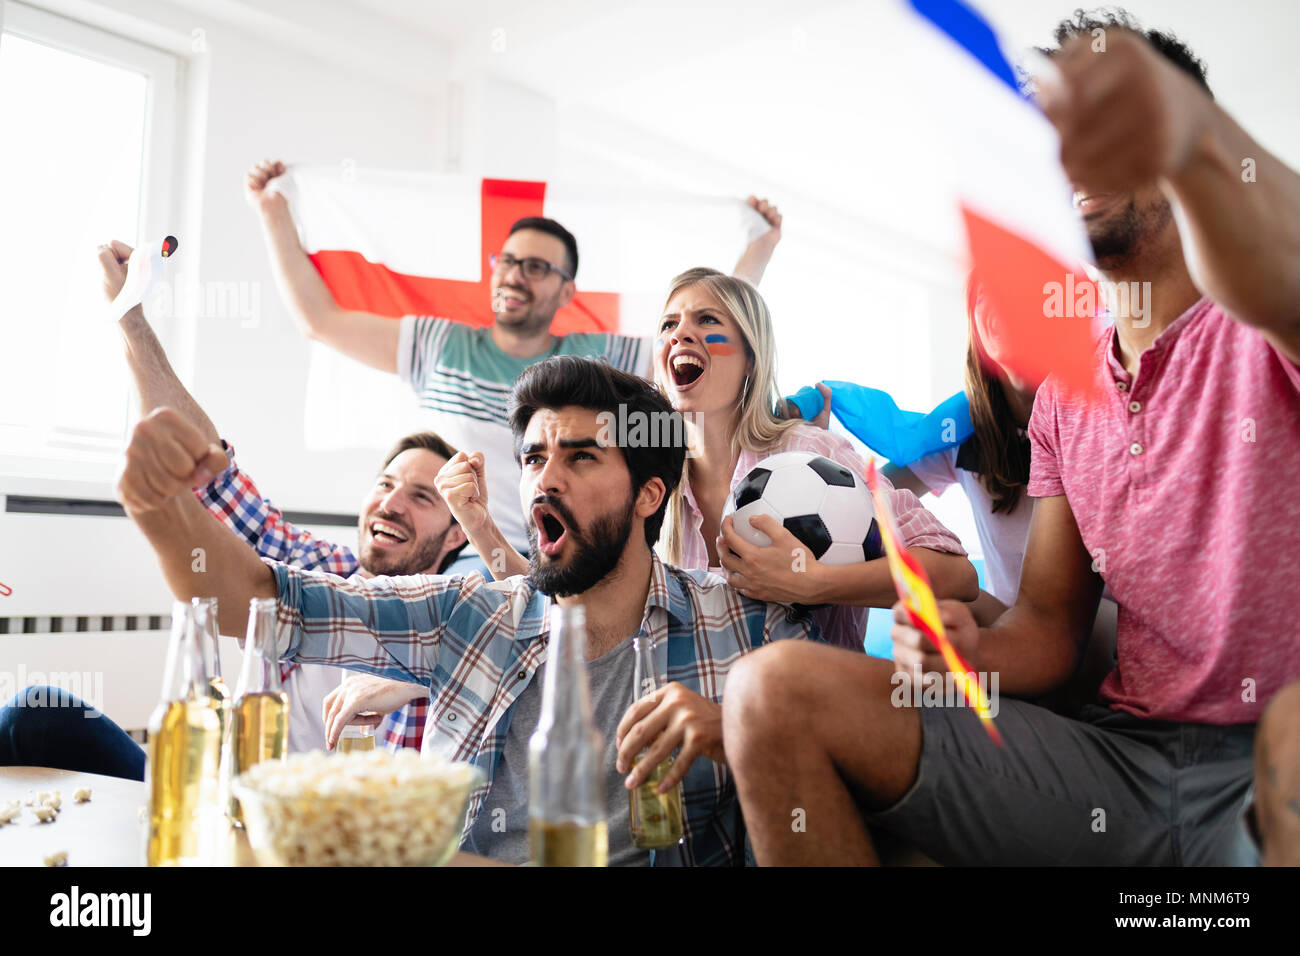 Group of multi-ethnic people celebrating football game Stock Photo